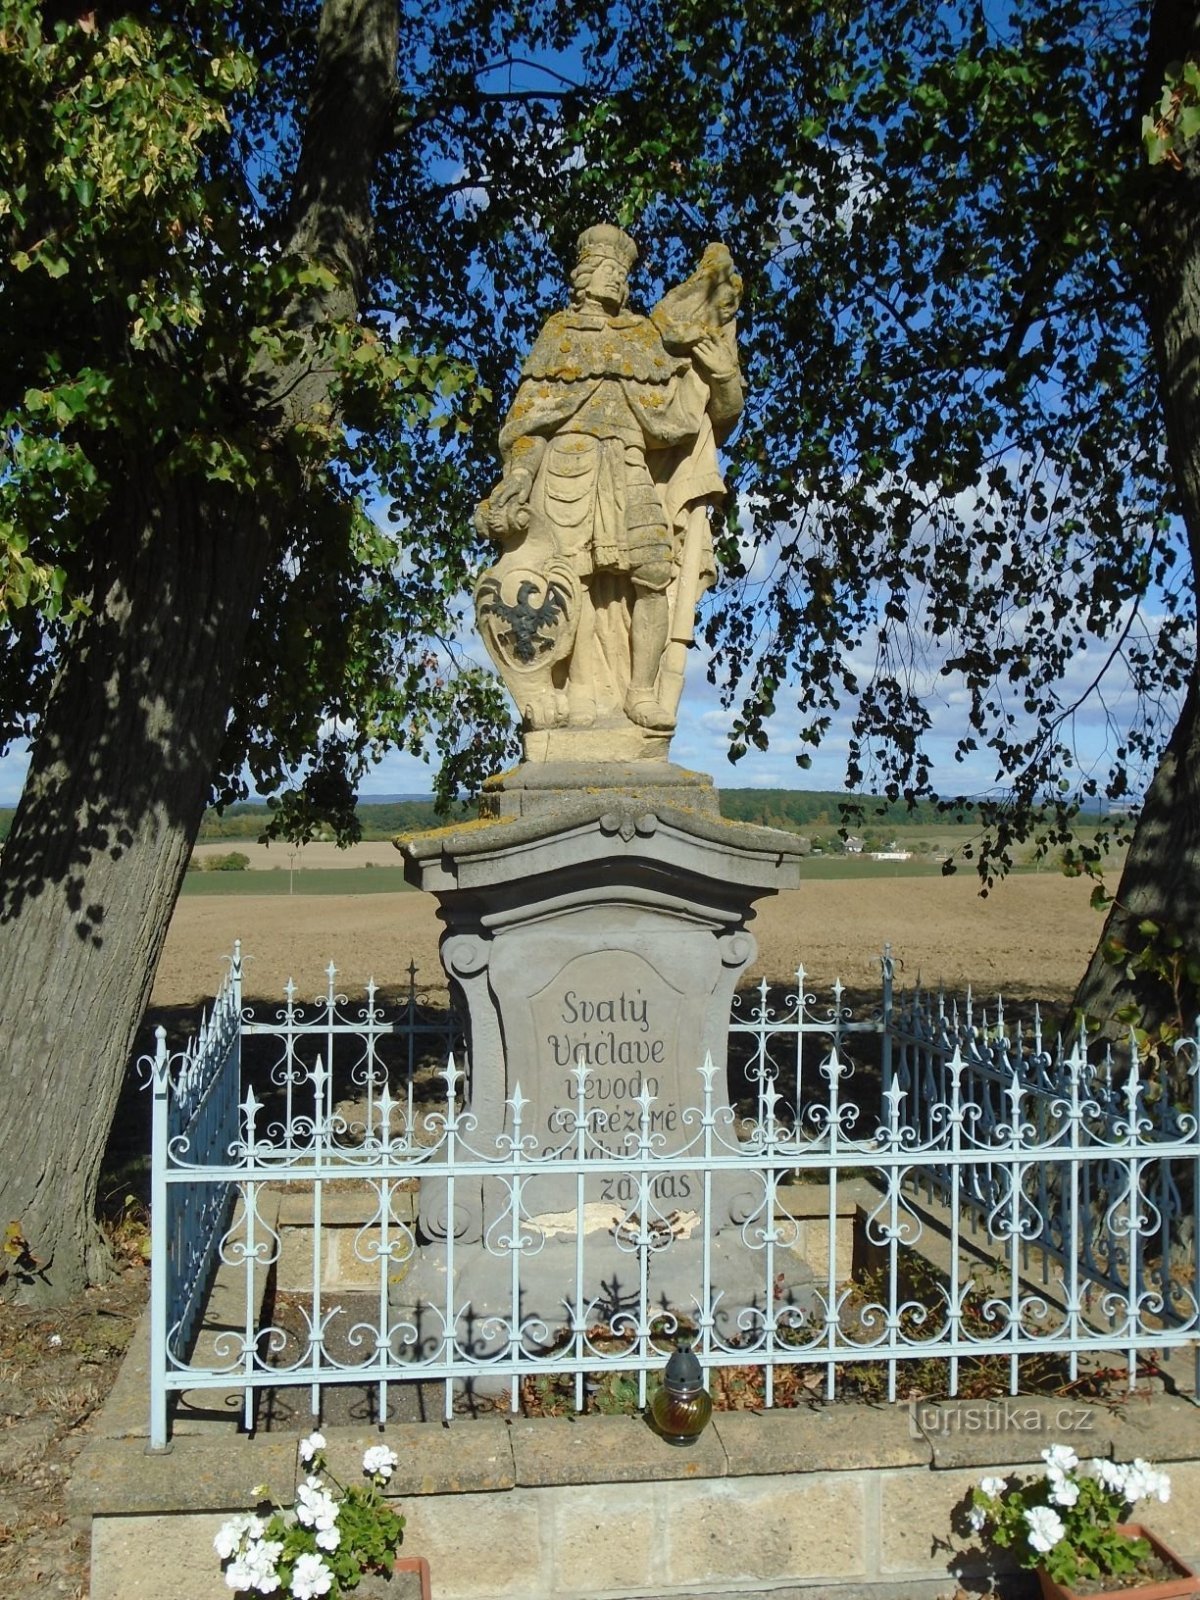 Posąg św. Václav (Petrovice, 29.9.2018)